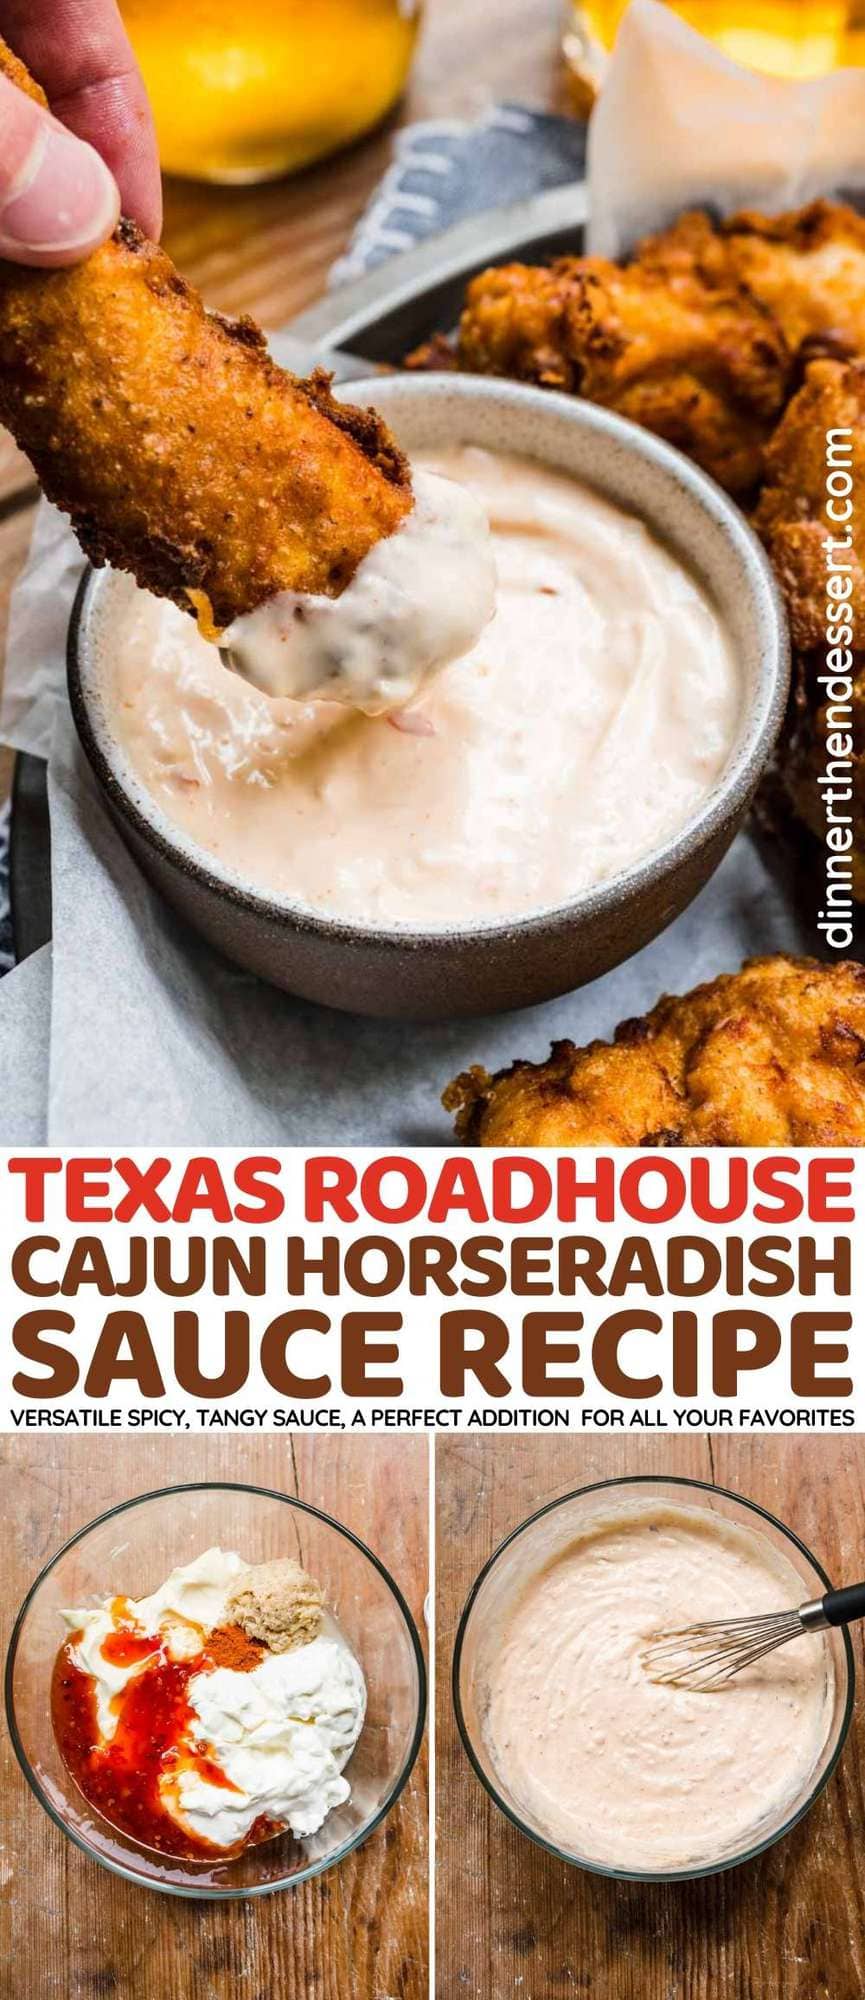 Texas Roadhouse Cajun Horseradish Sauce collage